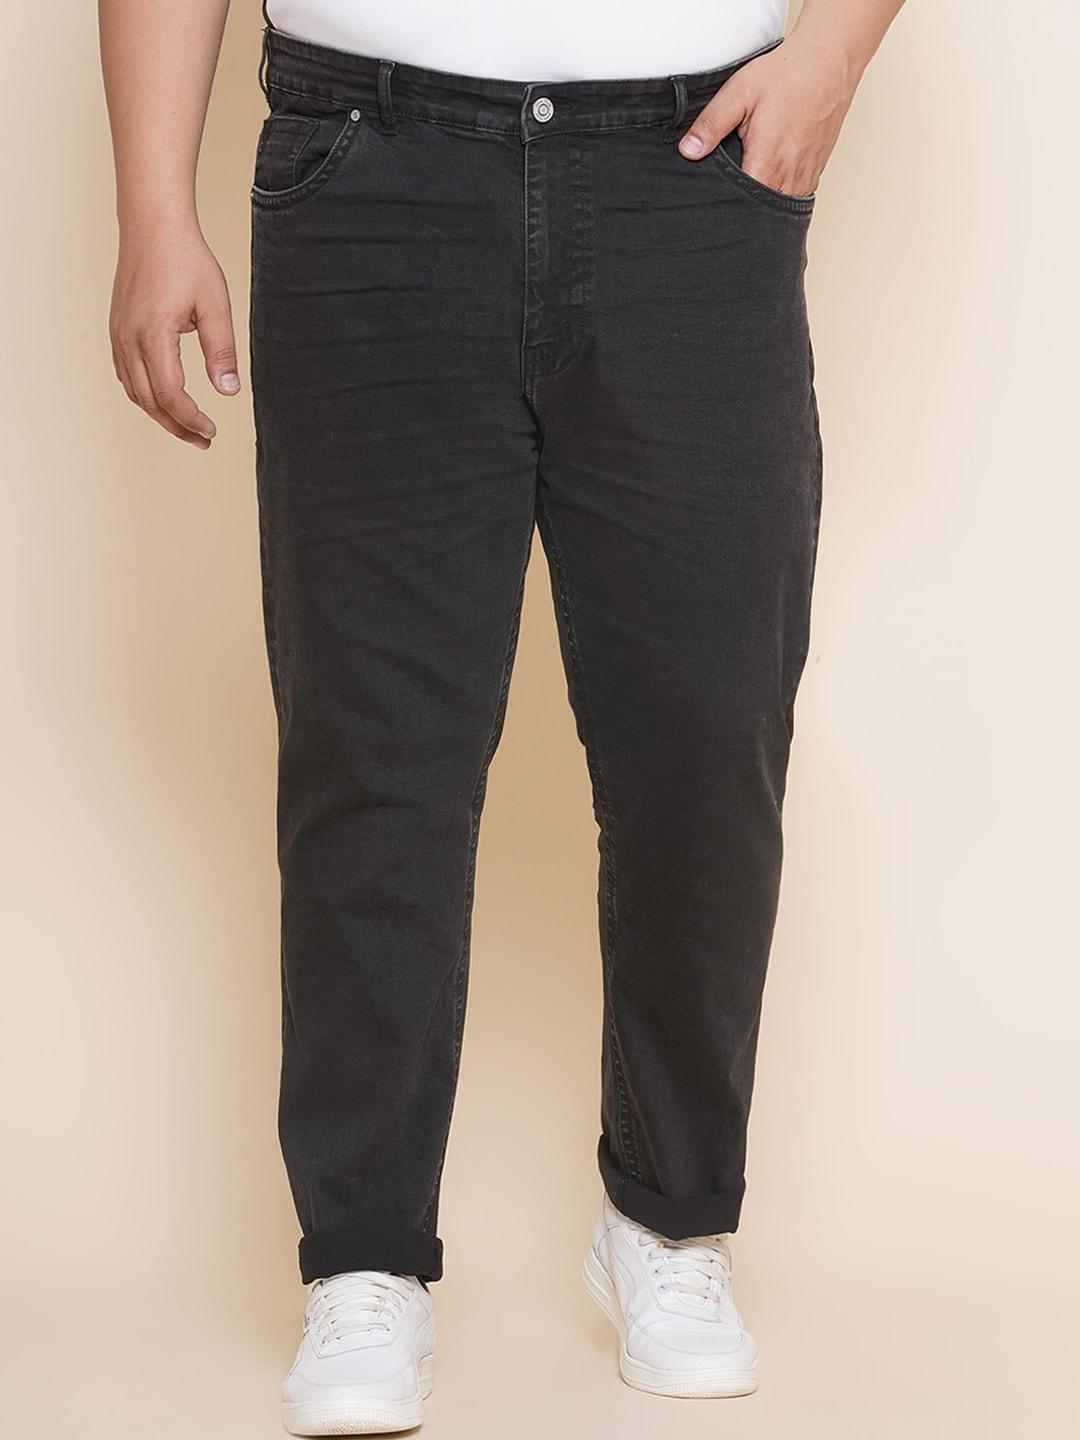 john-pride-men-plus-size-clean-look-stretchable-jeans